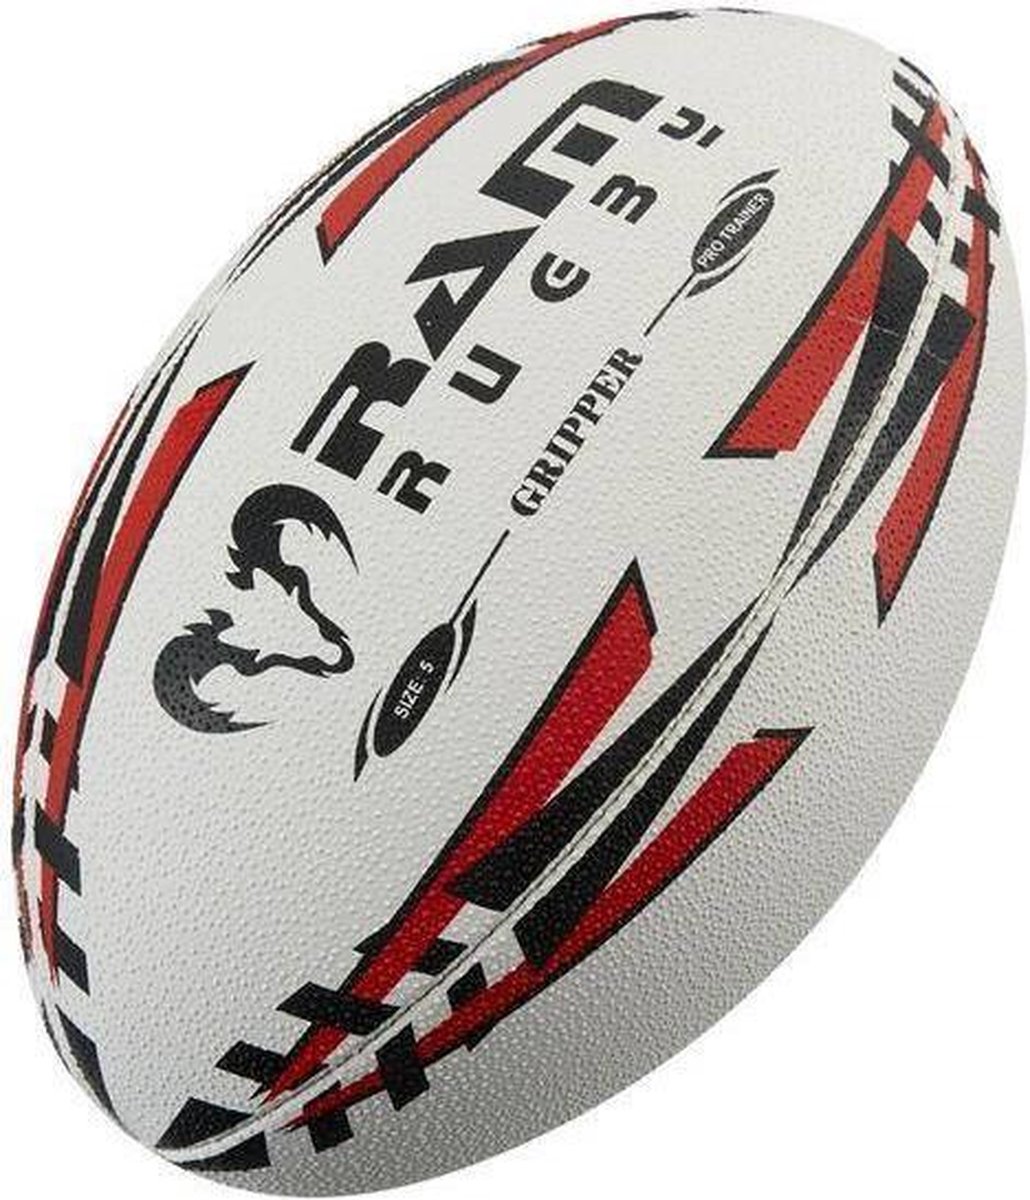 Gripper Pro rugbybal - Jeugd wedstrijdbal - 3D grip - Maat 4 - Fluor